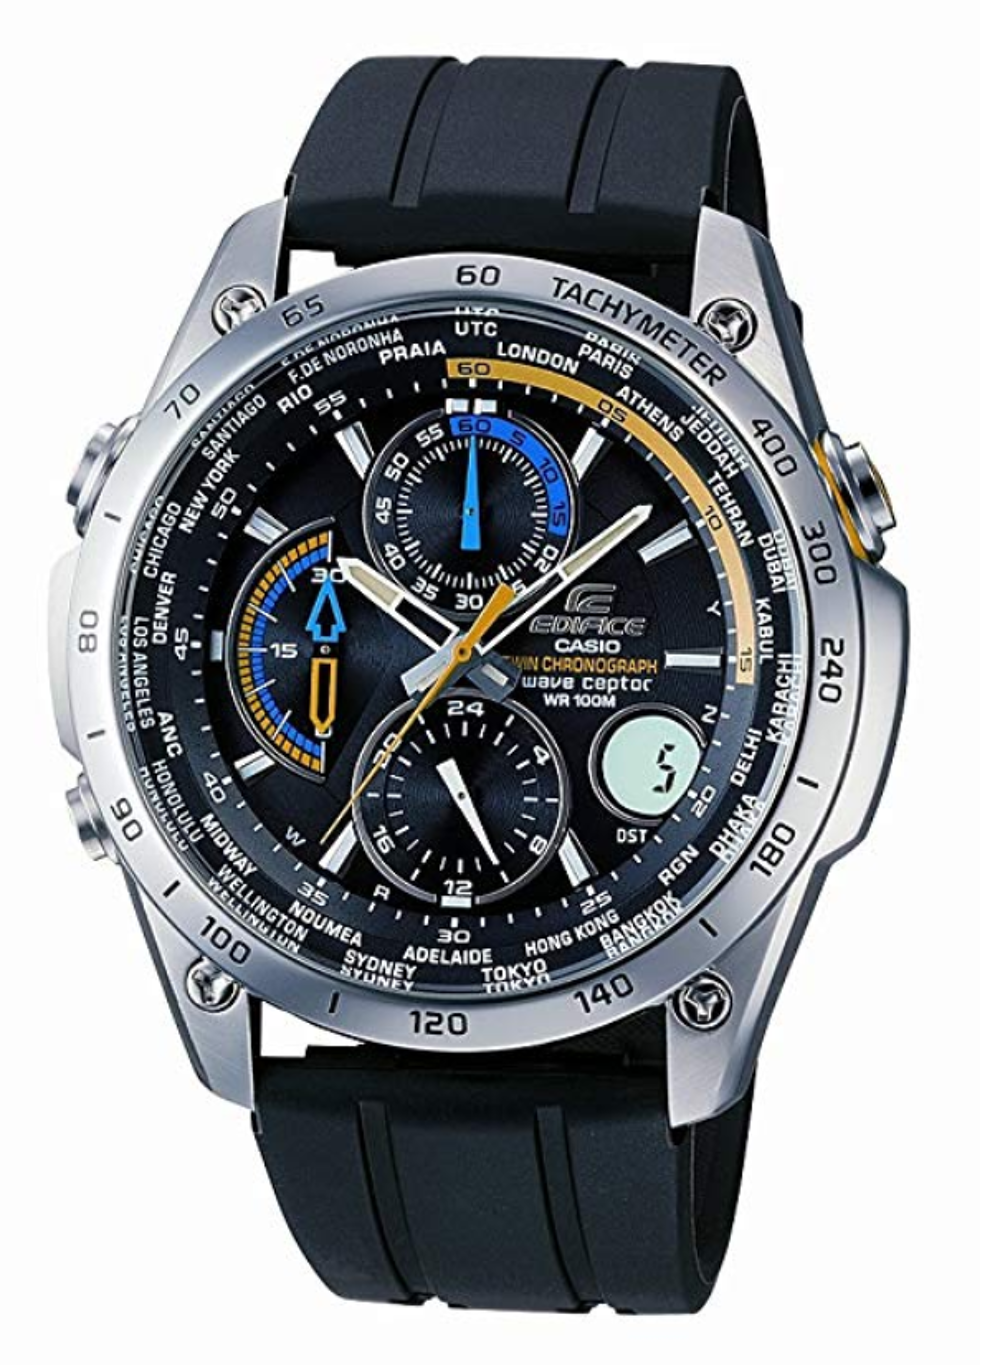 Magnifique montre CASIO EDIFICE EQW-500E-1AVER
Bijoux et montres